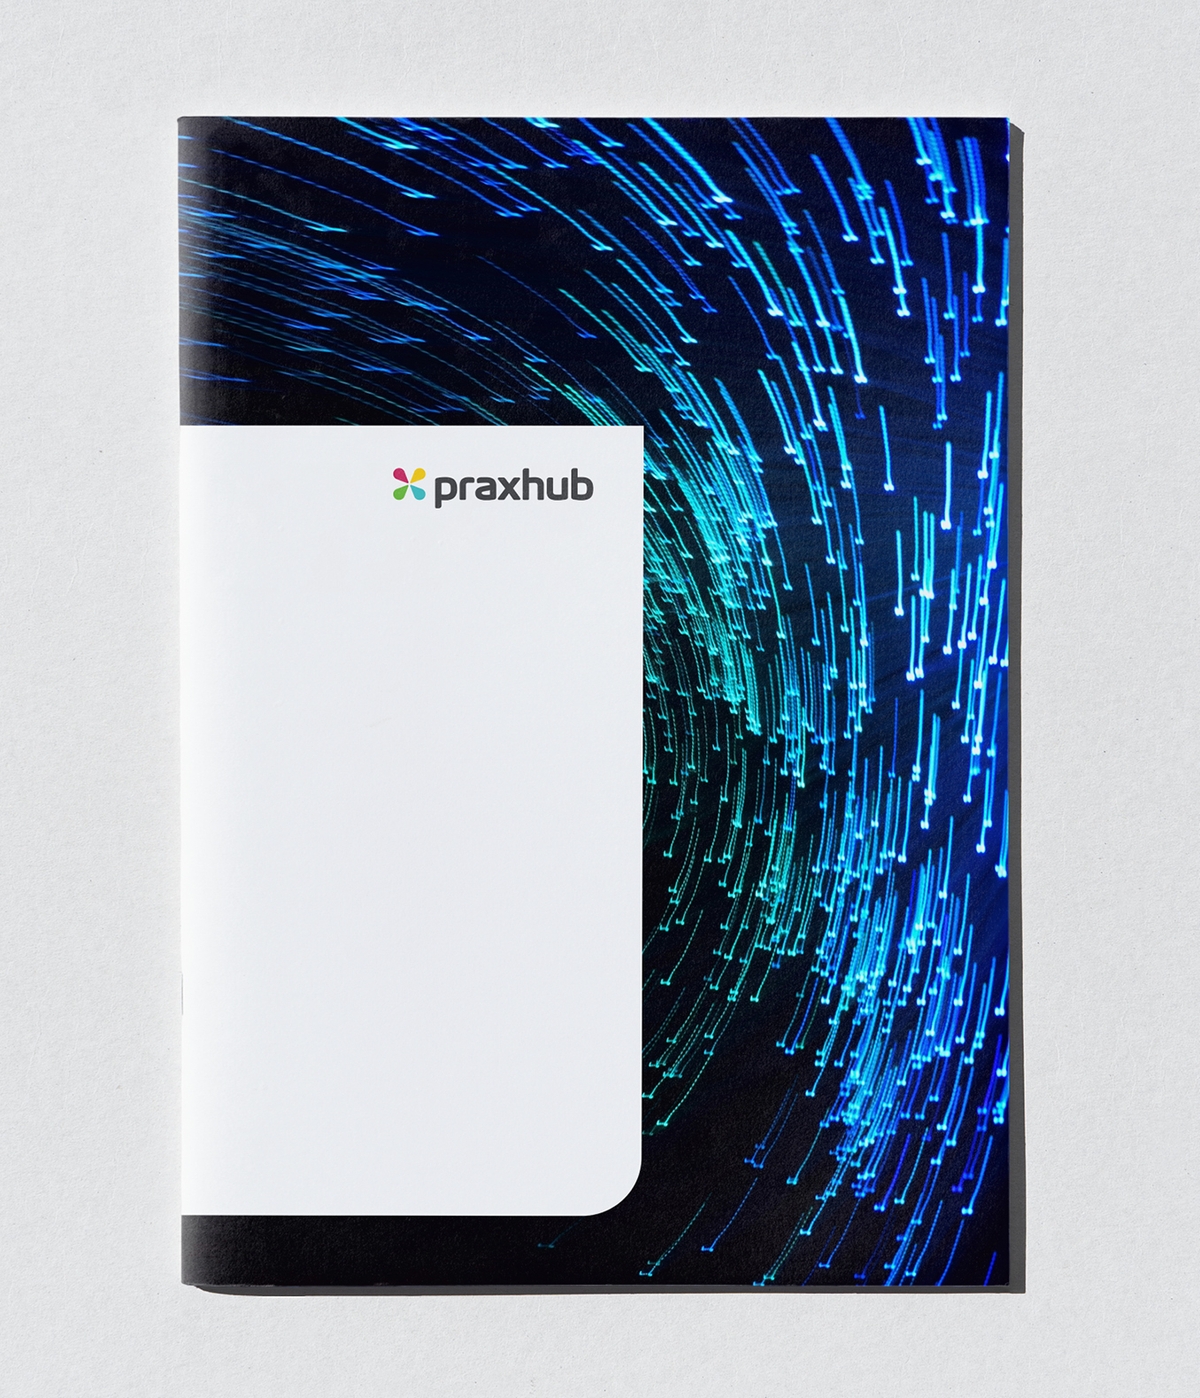 Praxhub - A4 Document - Brand Strategy - Here for Health Care | Atollon - a design company